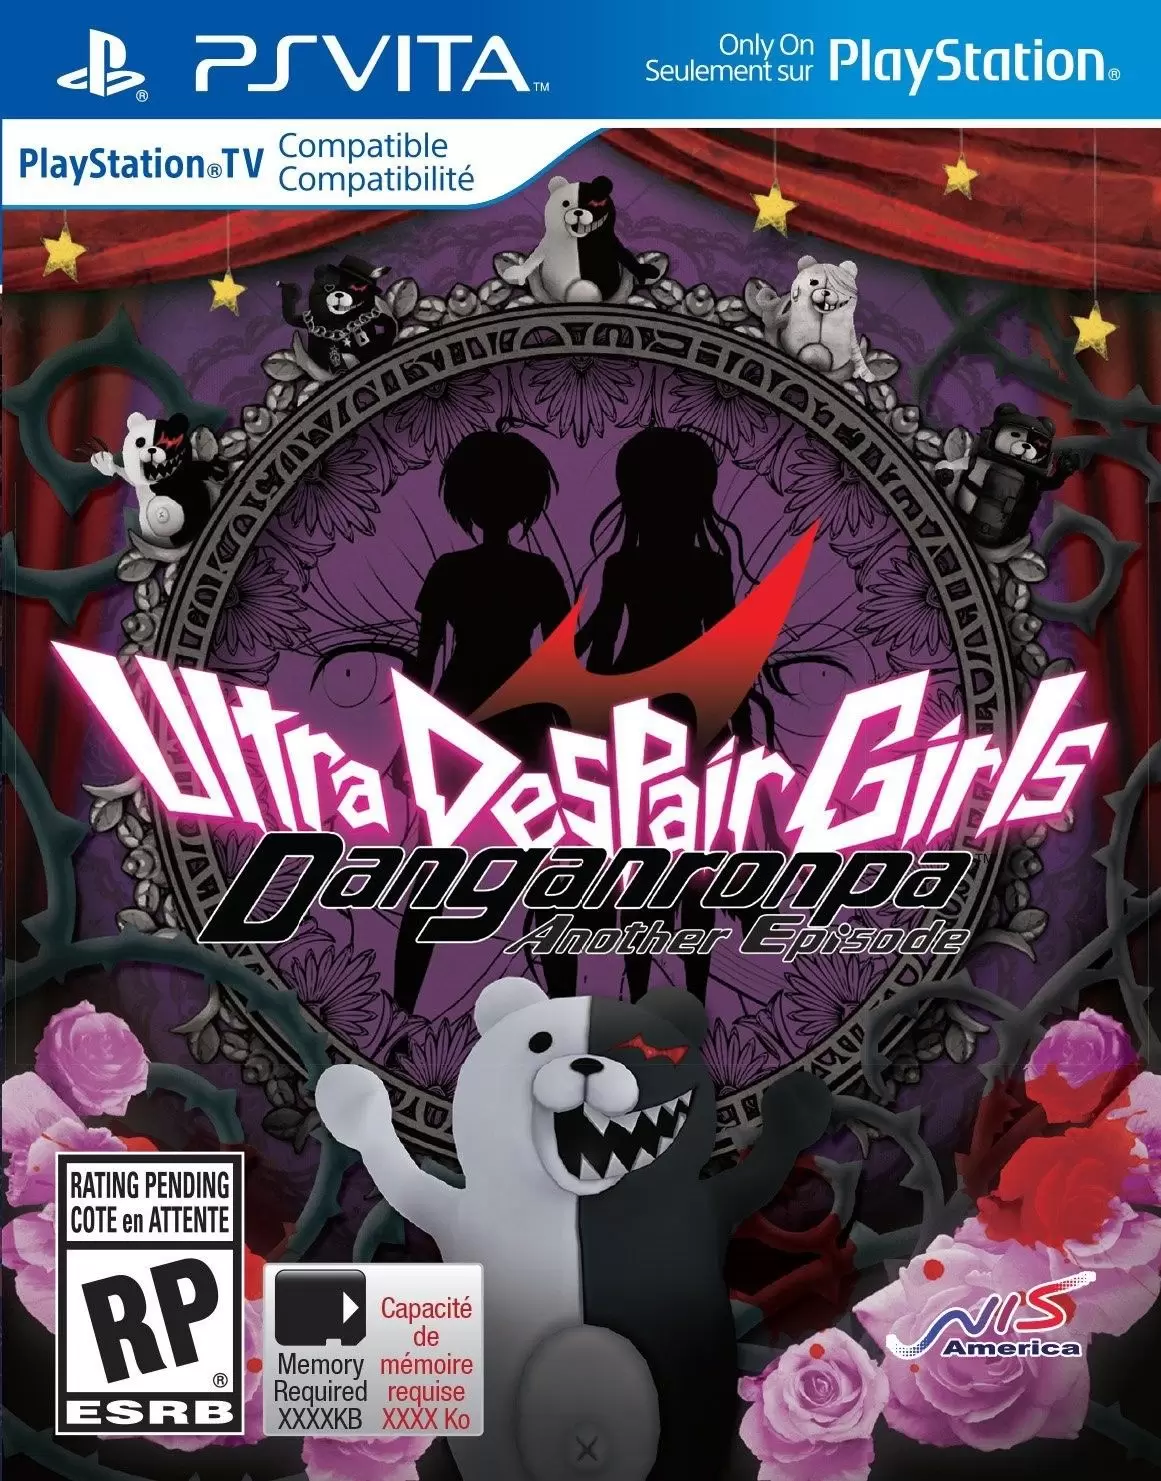 PS Vita Games - Danganronpa Another Episode: Ultra Despair Girls